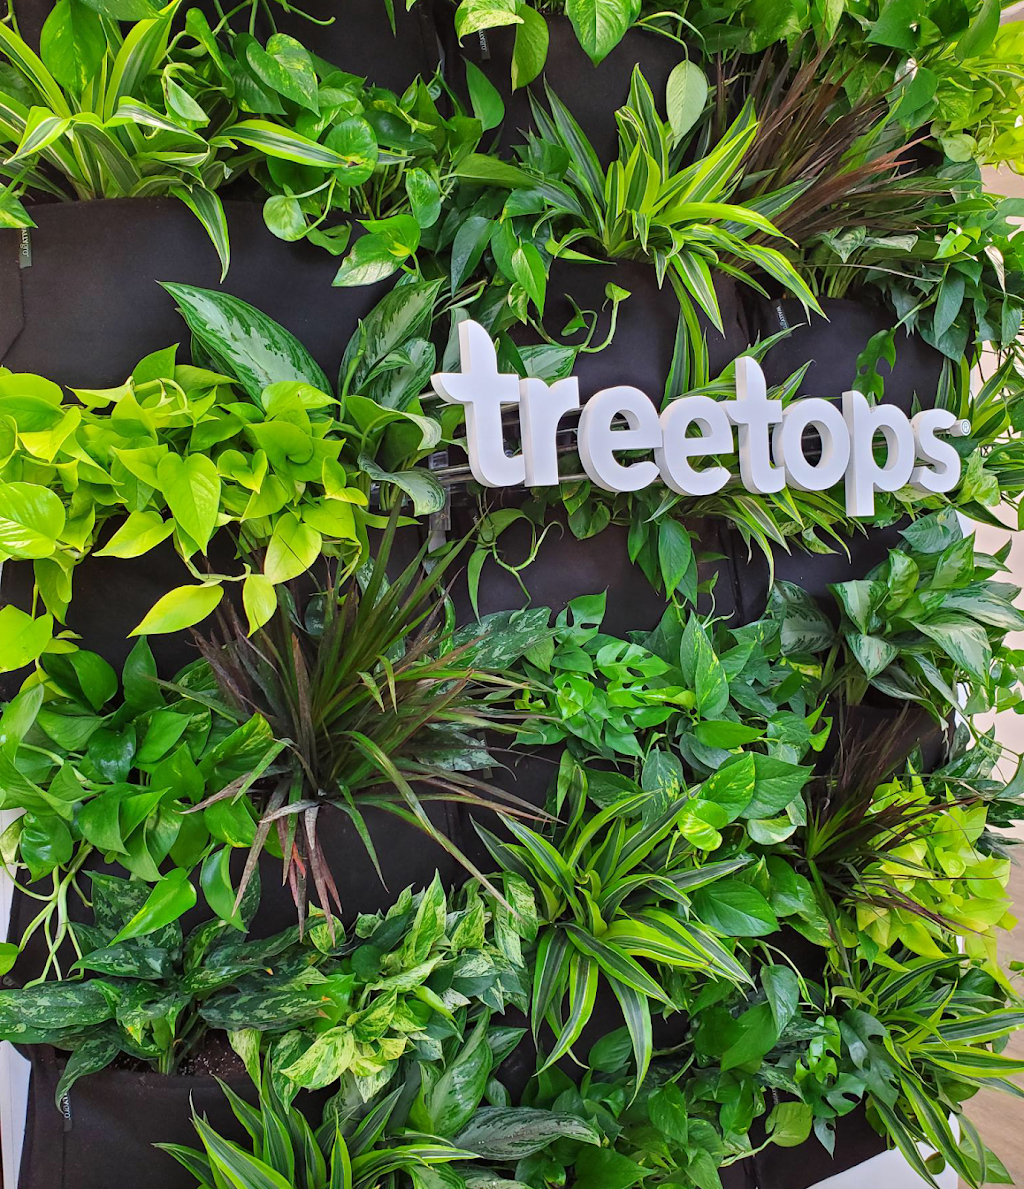 TreeTops Cannabis Co. | 1255 Kilally Rd, London, ON N5Y 6K9, Canada | Phone: (519) 453-6996